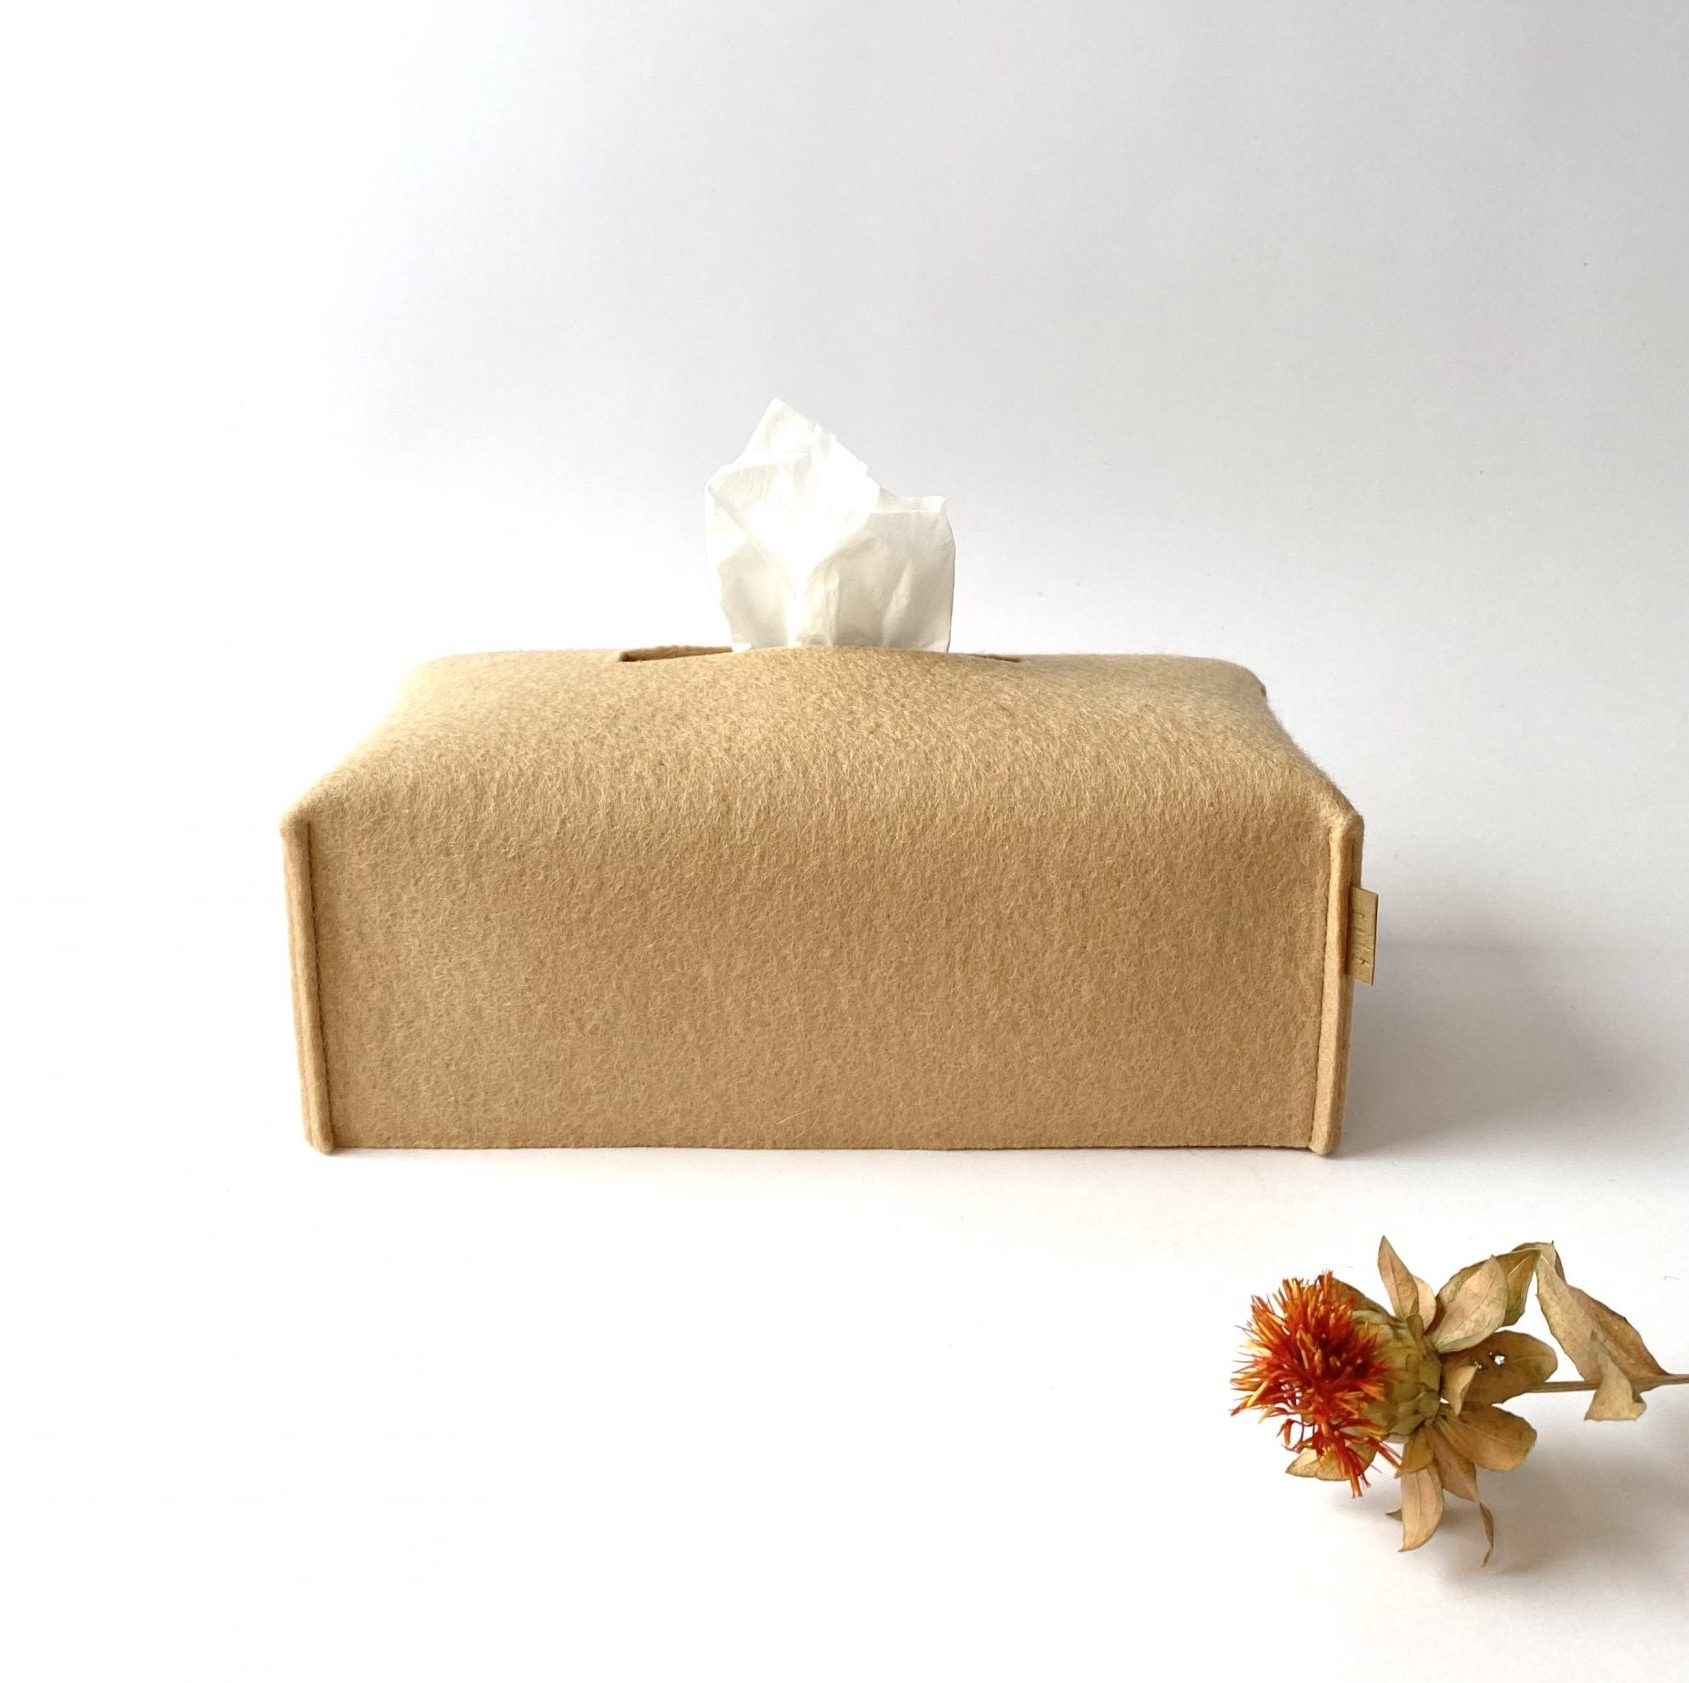 tissuebox-cover LEAFSTE – frysk filt – moois van – tassen, kussens meer…